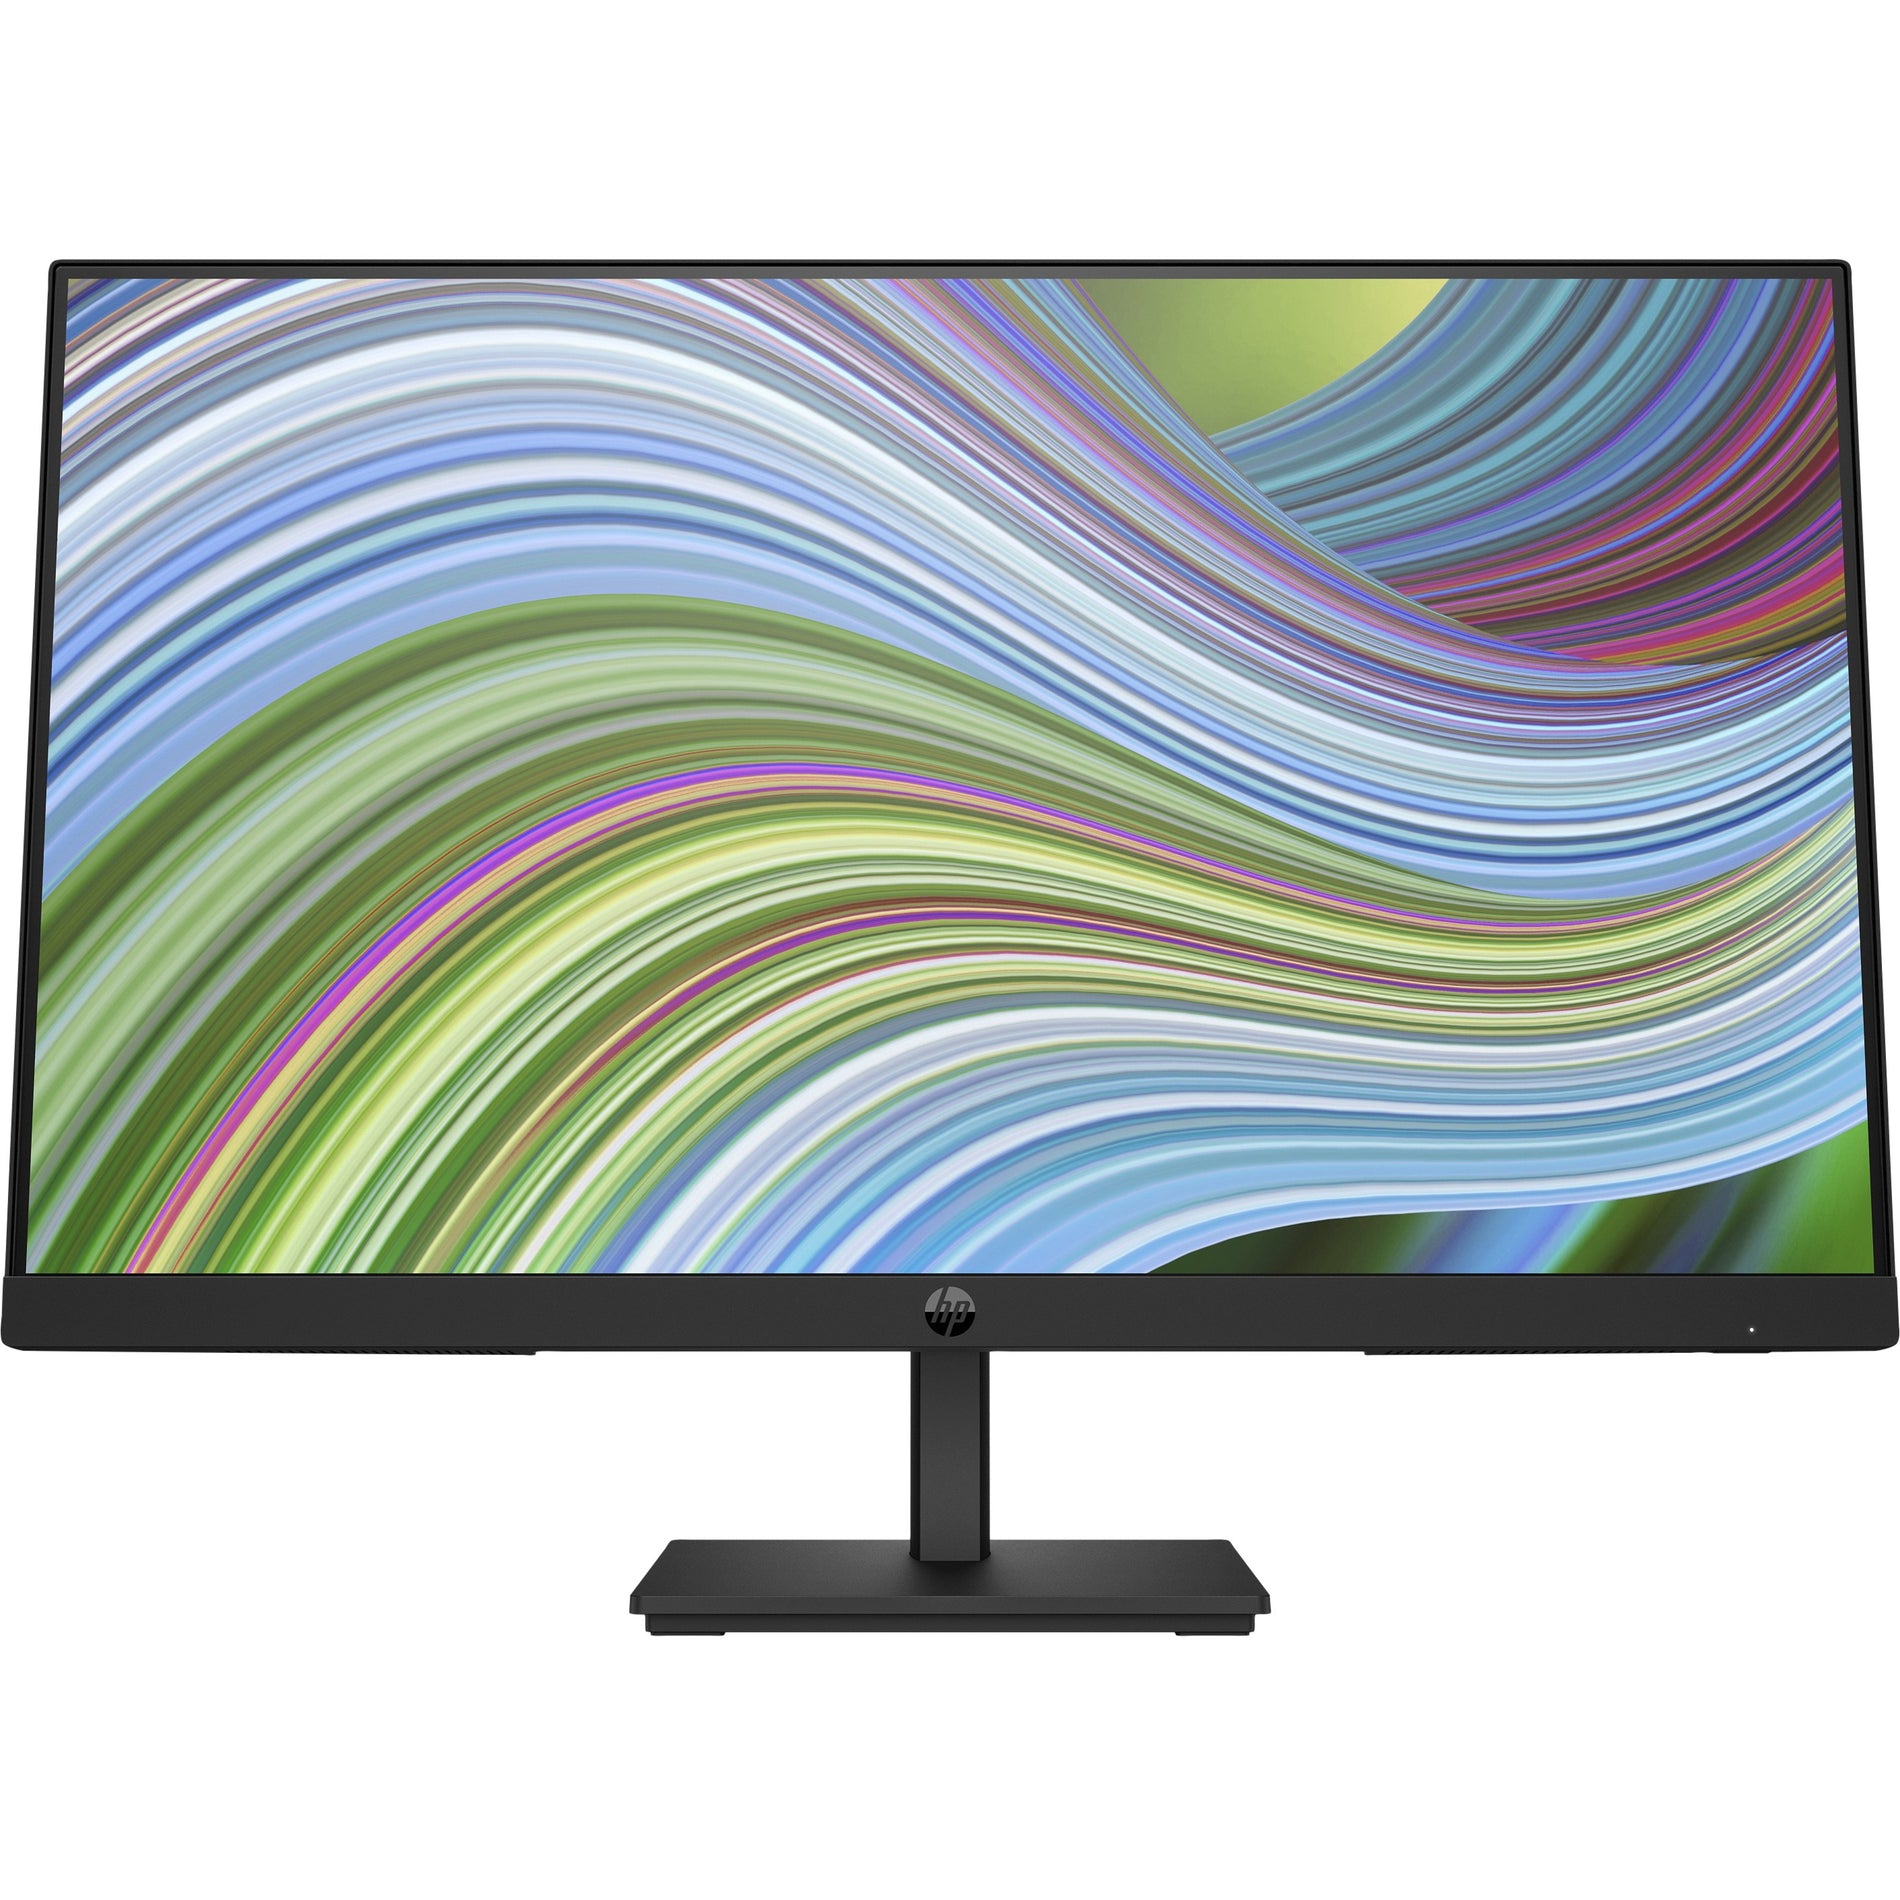 HP P24 G5 FHD Monitor, 23.8" Full HD LCD, 16:9, Black, 75Hz Refresh Rate